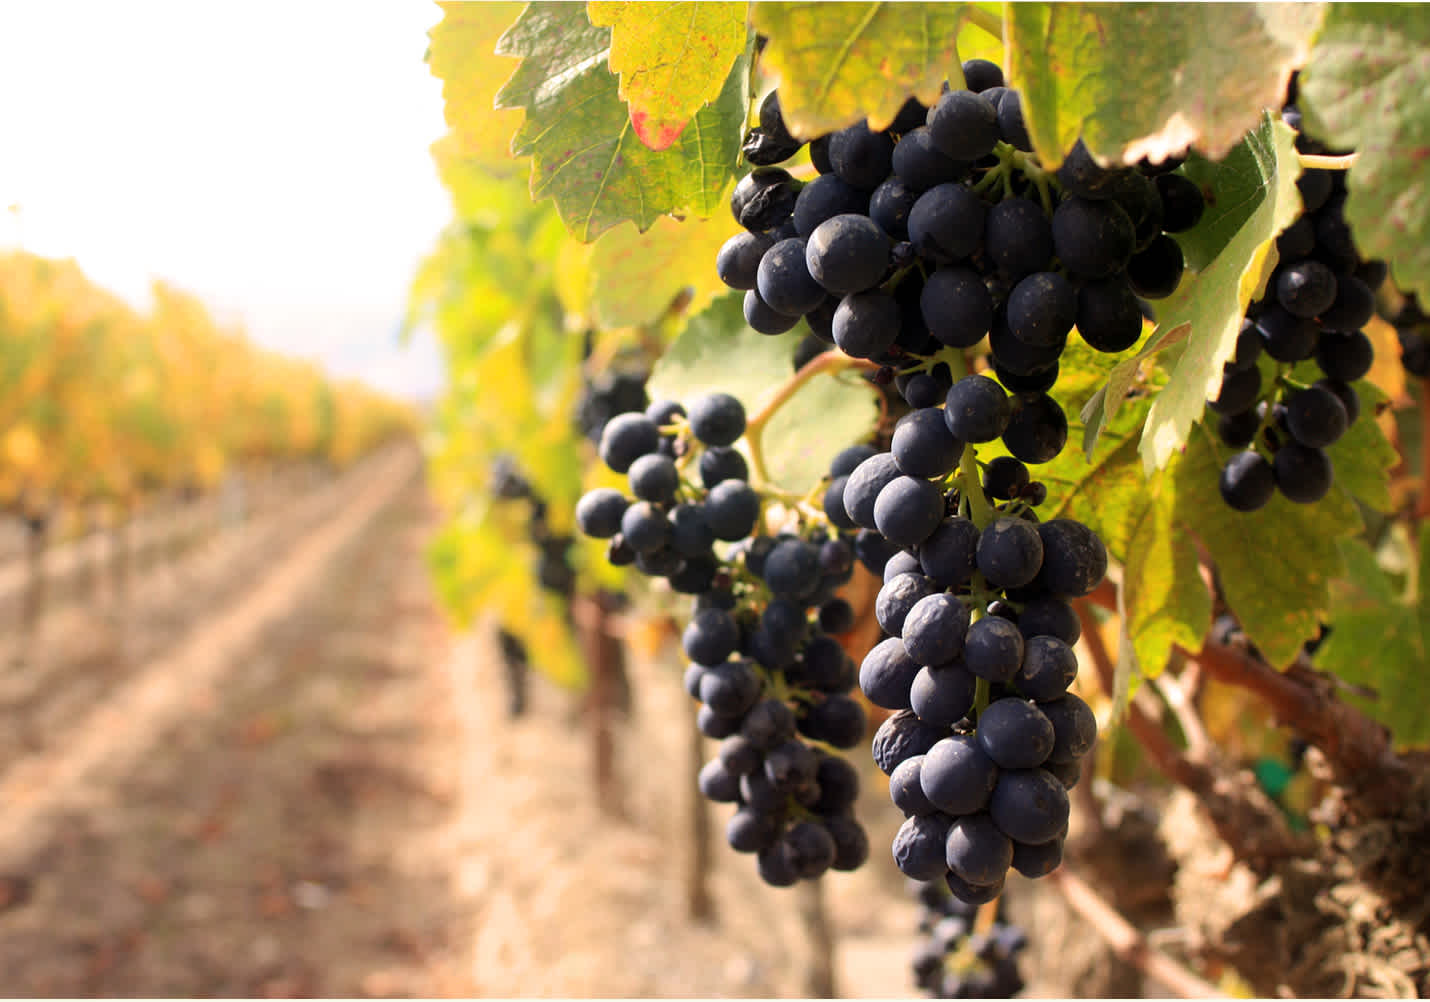 Black wine grapes on the vine